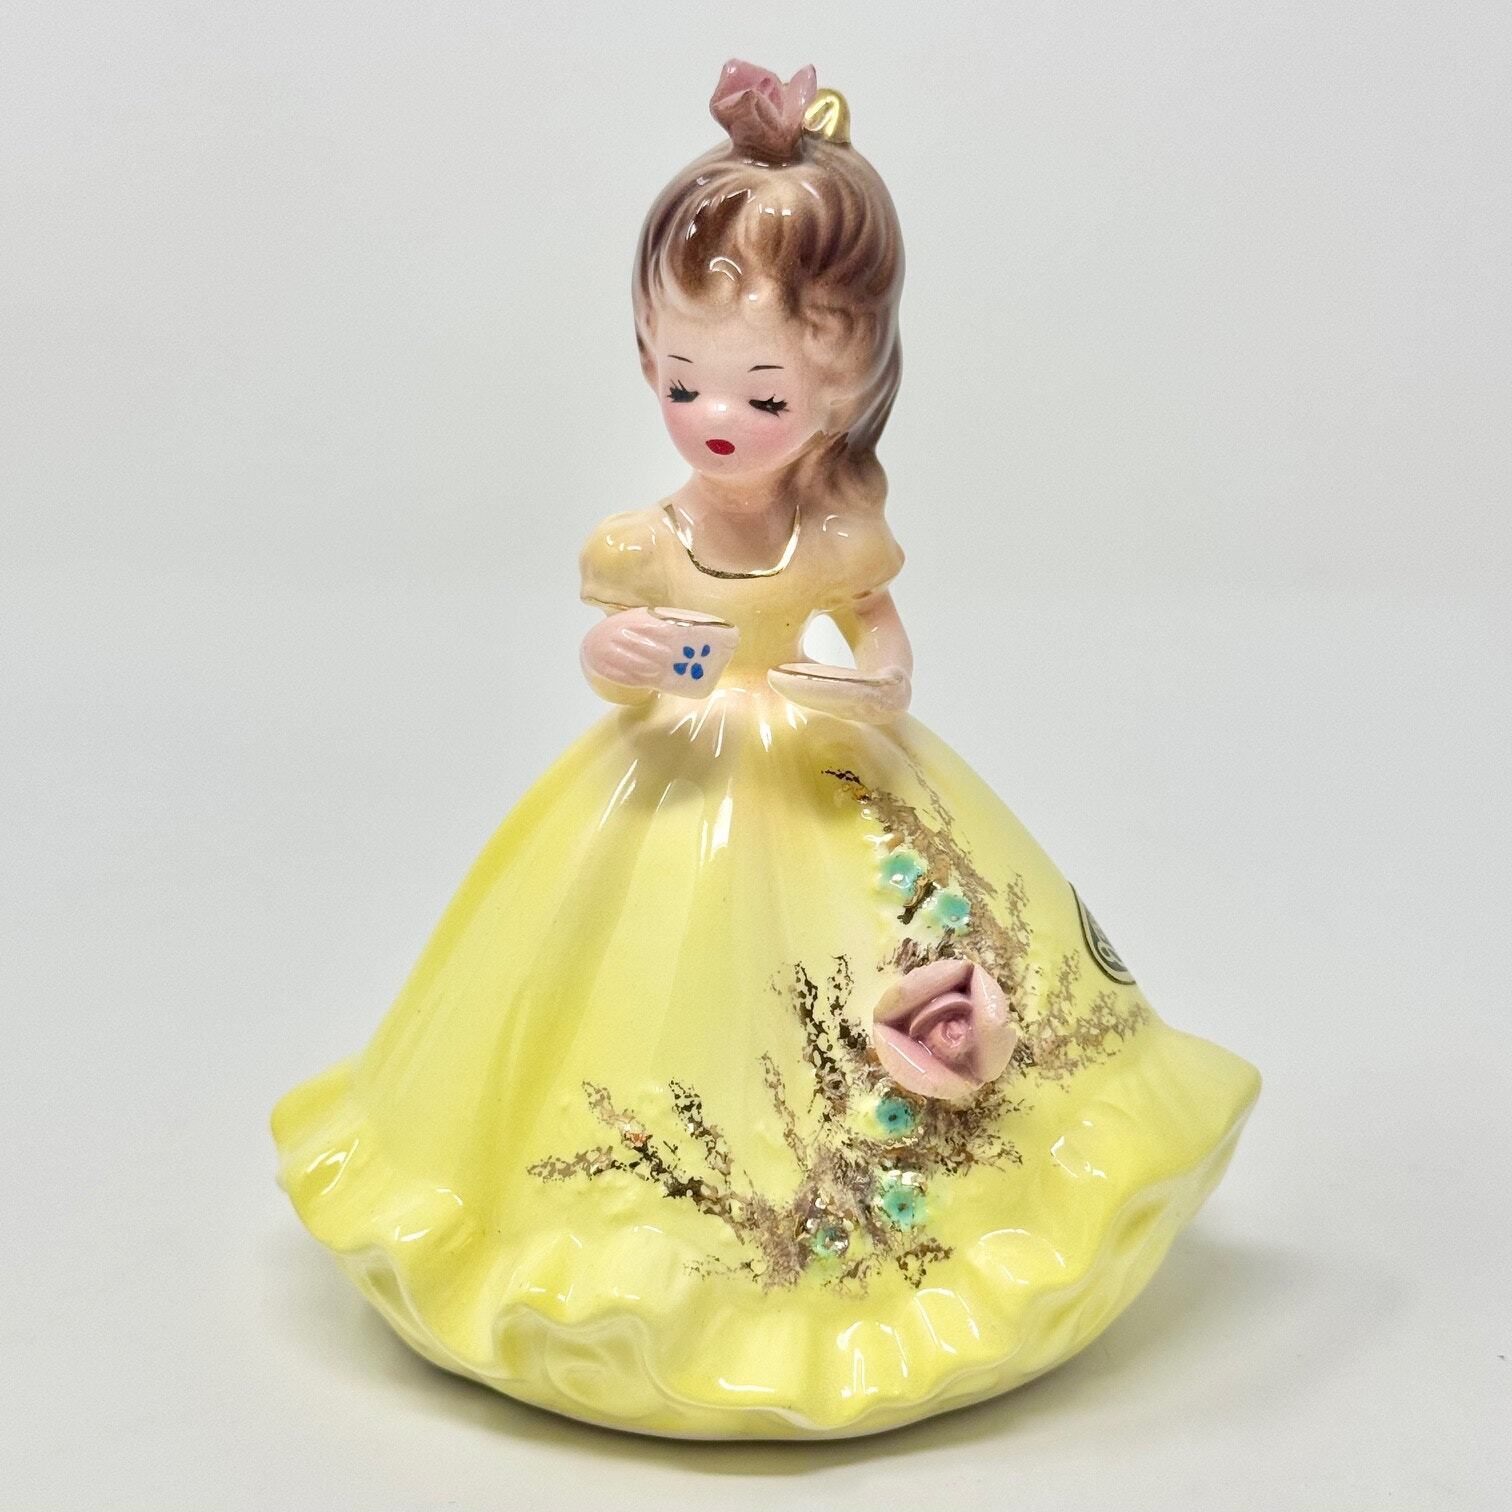 Vintage Josef Originals Days of the Week Series Thursday girl ceramic figurine